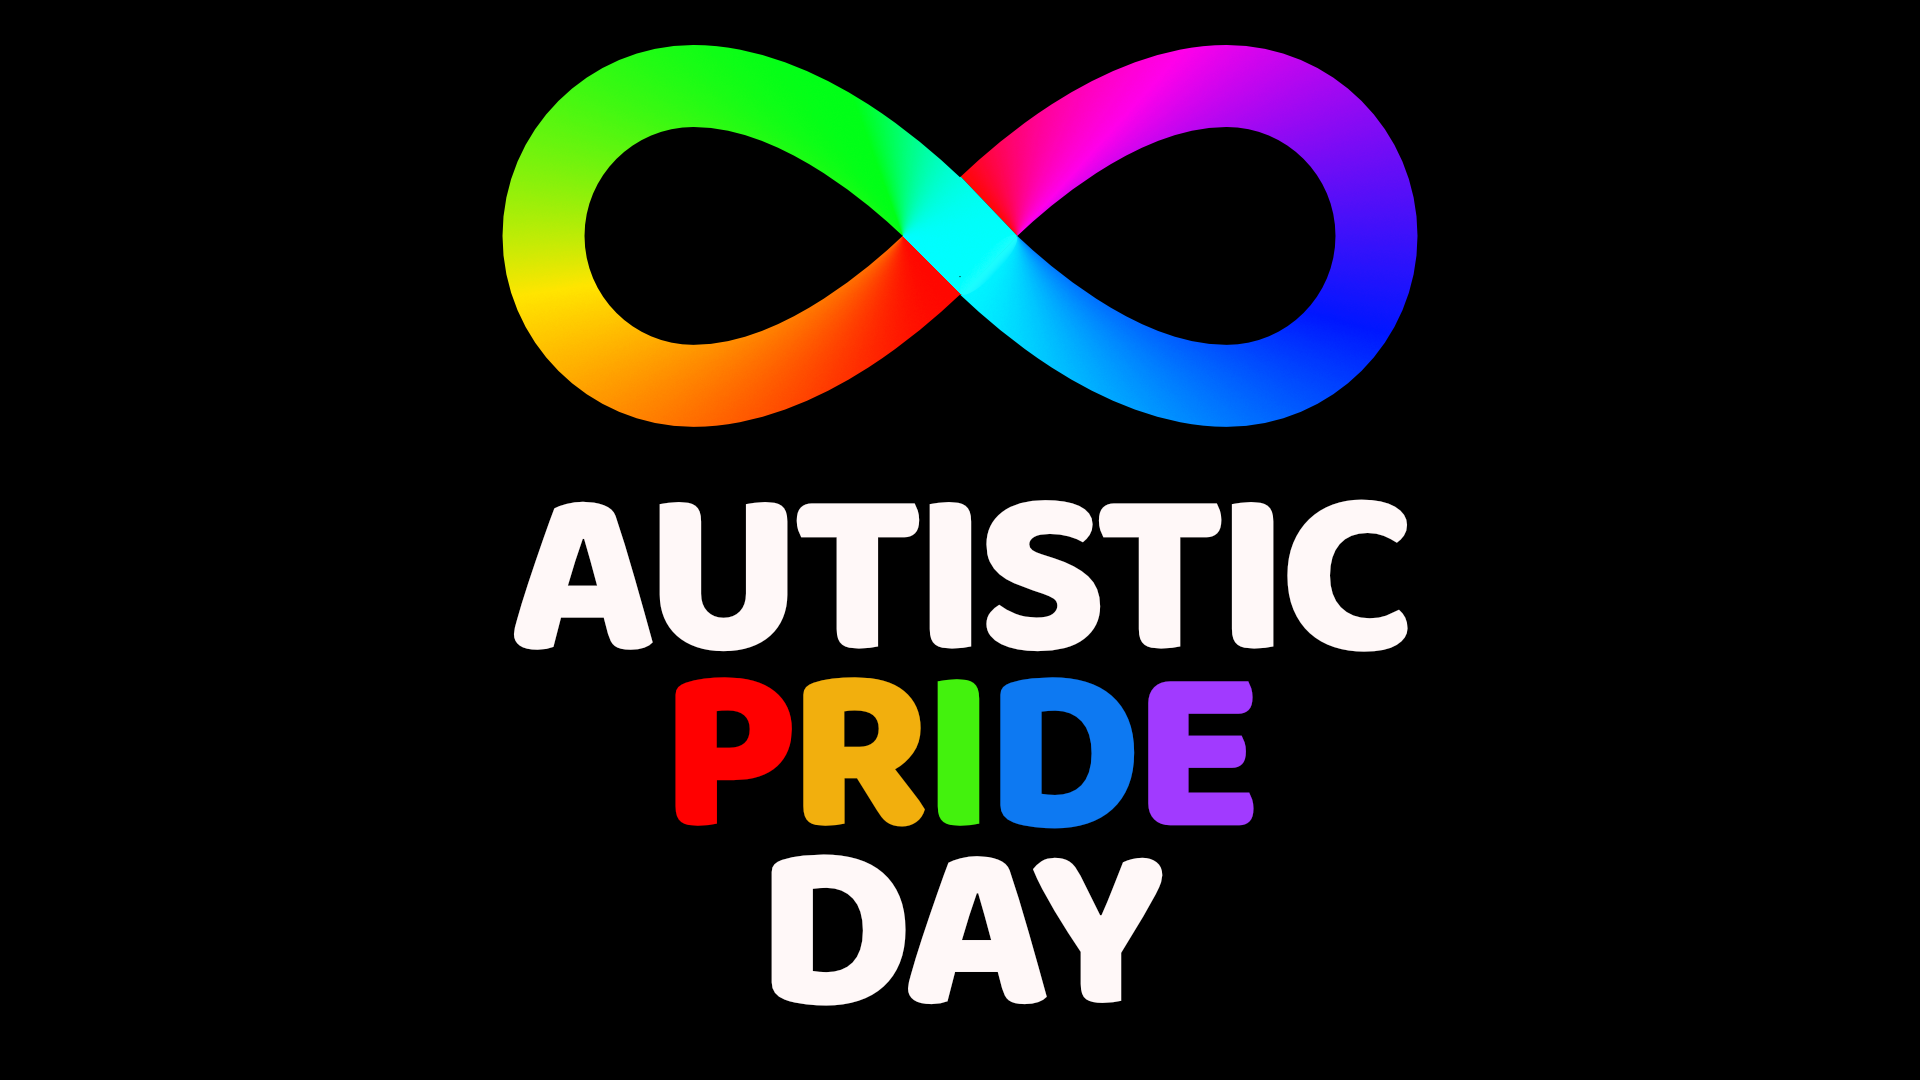 Autistic Pride Day 18 June ஆட்டிஸ்டிக் பெருமை நாள் 18 ஜூன்